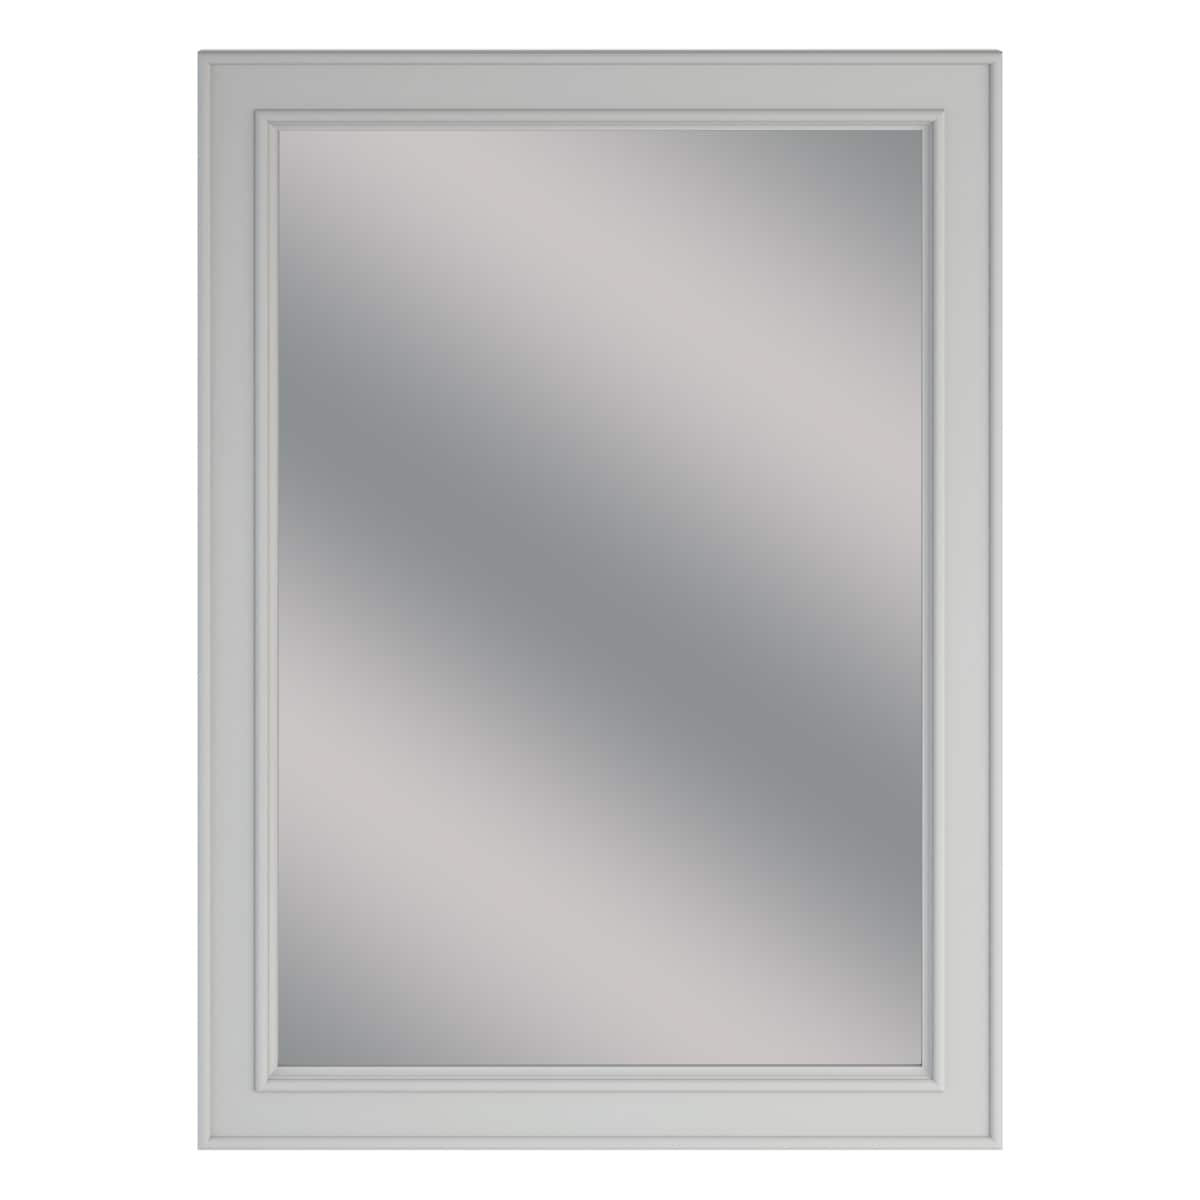 Wrightsville 22-in x 30-in Light Gray Rectangular Framed Bathroom Vanity Mirror | - allen + roth 1116MR-22-242